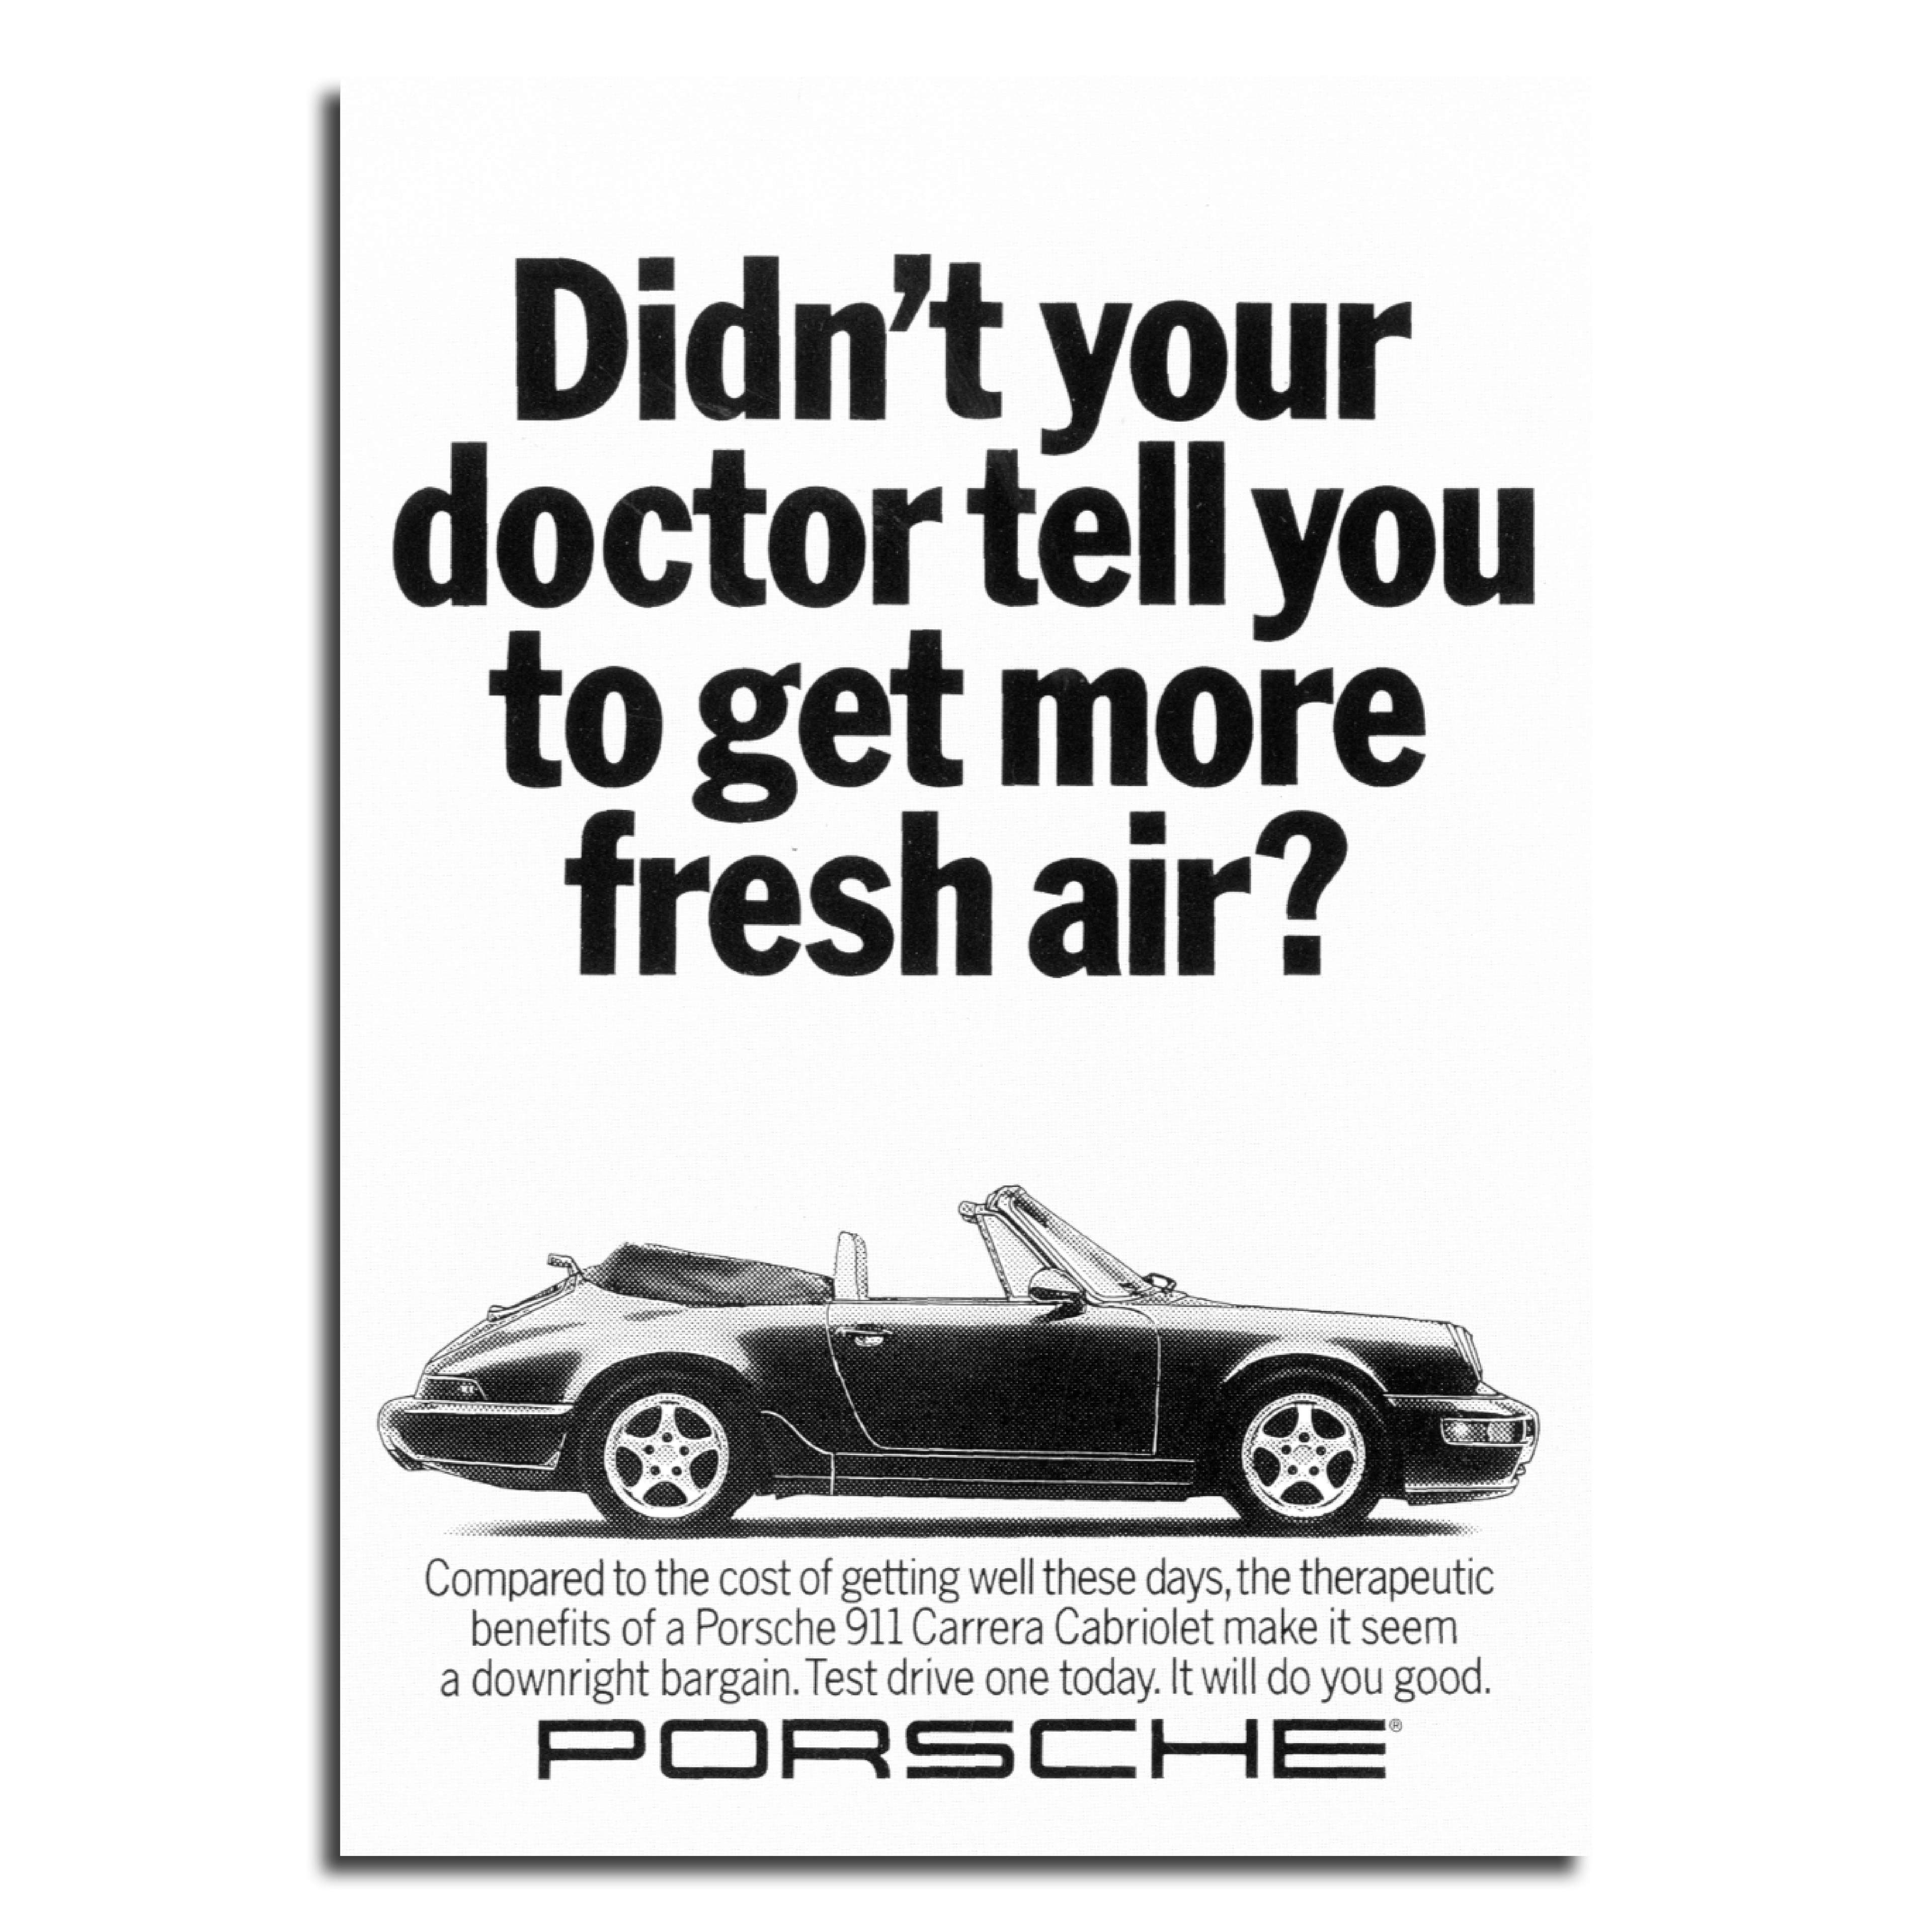 Photo of an open-top Porsche with award-winning headline about getting more fresh air.